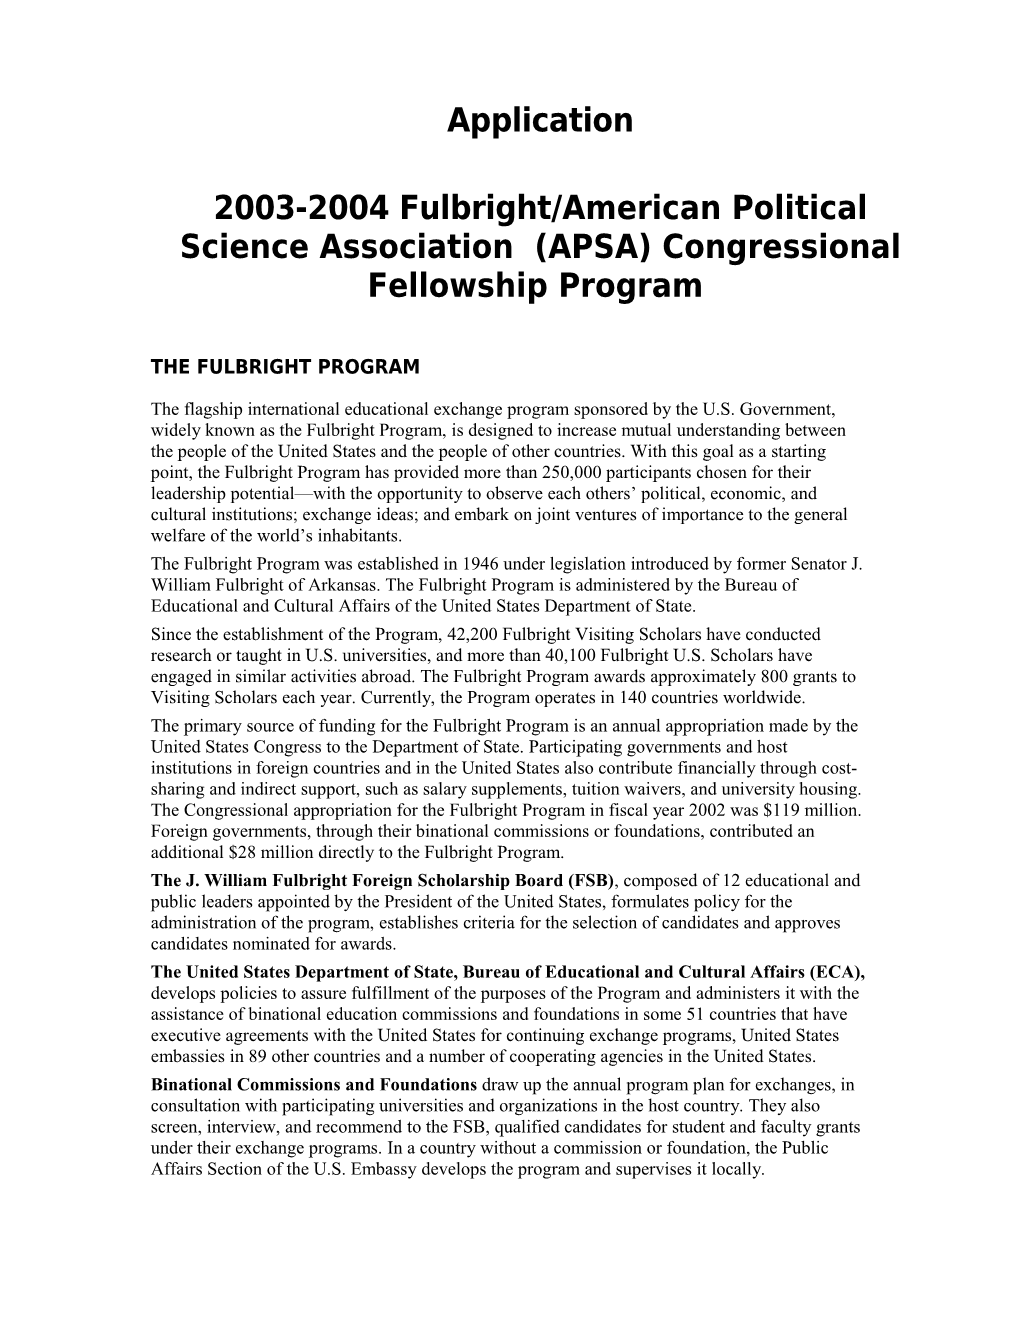 Application for the Fulbright Scholar Program